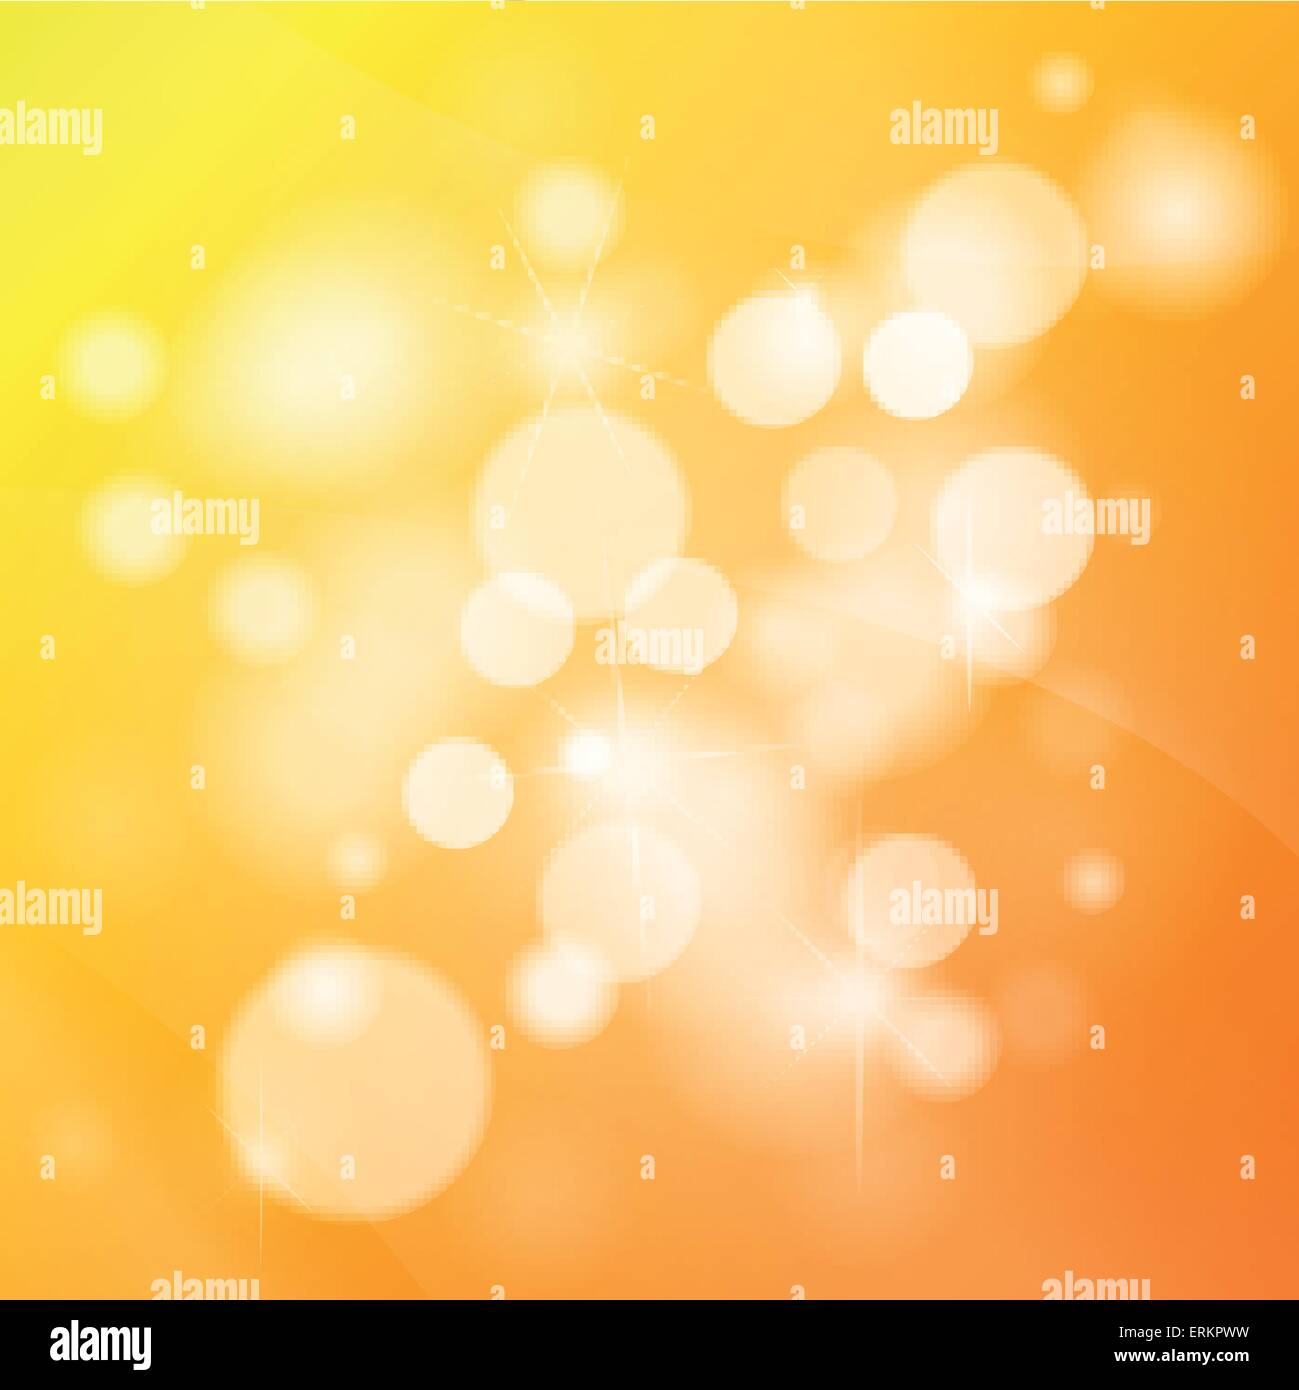 Vector illustration of abstract light orange background stock vector image art